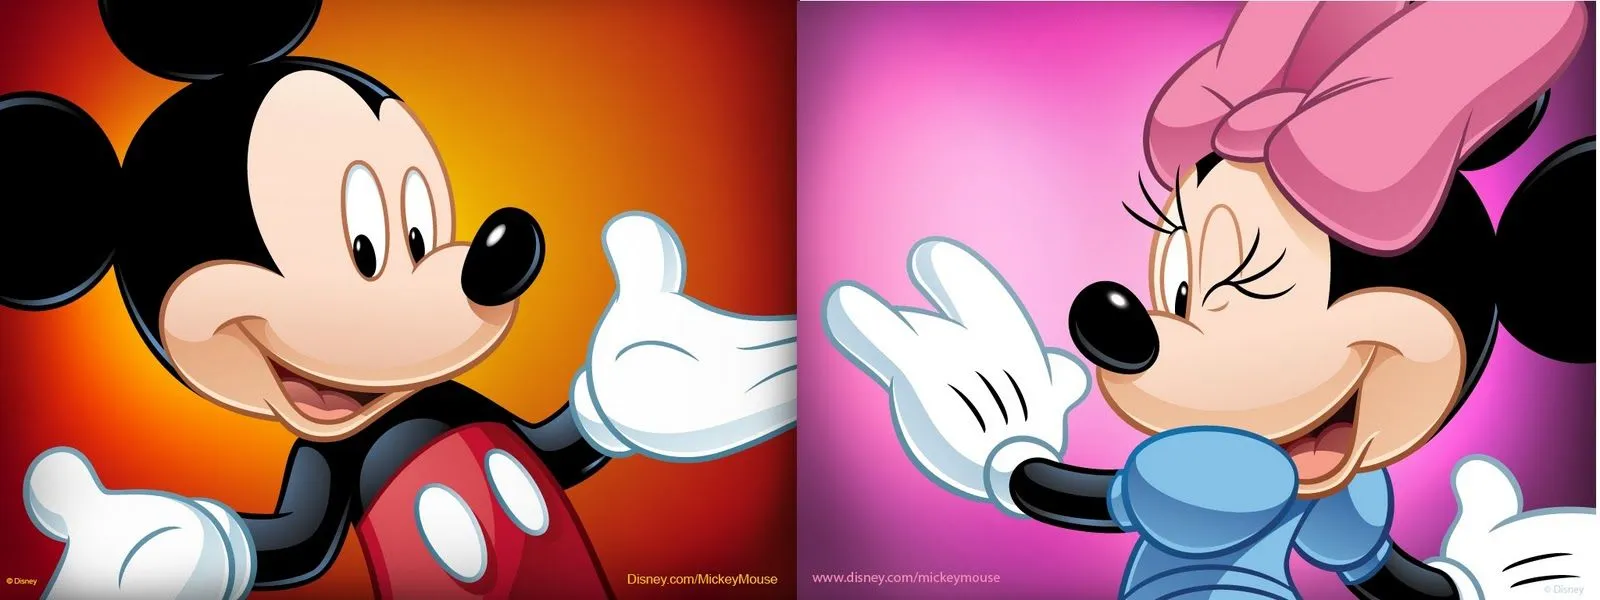 Fiesta Mickey & Minnie Mouse | lacelebracion